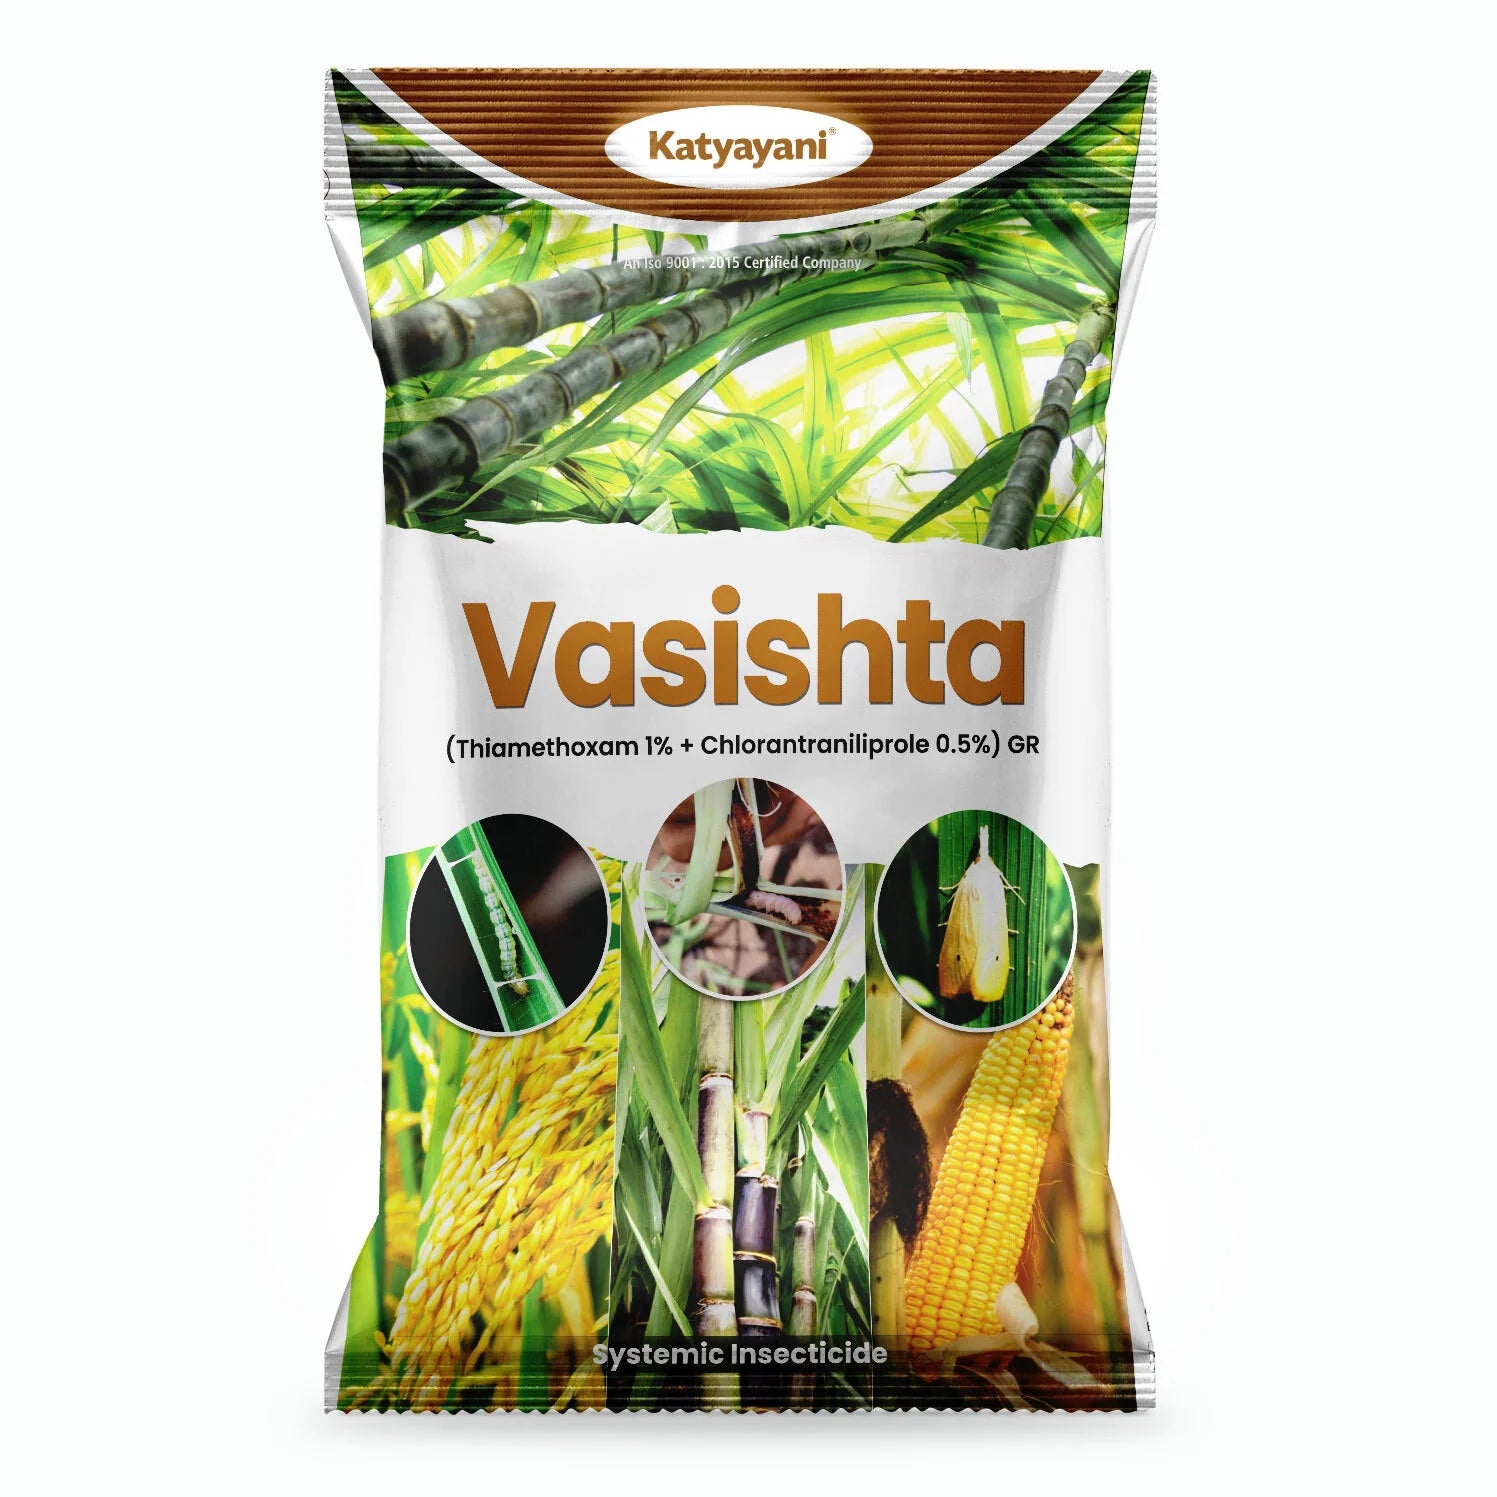 Katyayani Vasishta | Thiamethoxam 1% + Chlorantraniliprole 0.5% GR | Chemical Insecticide